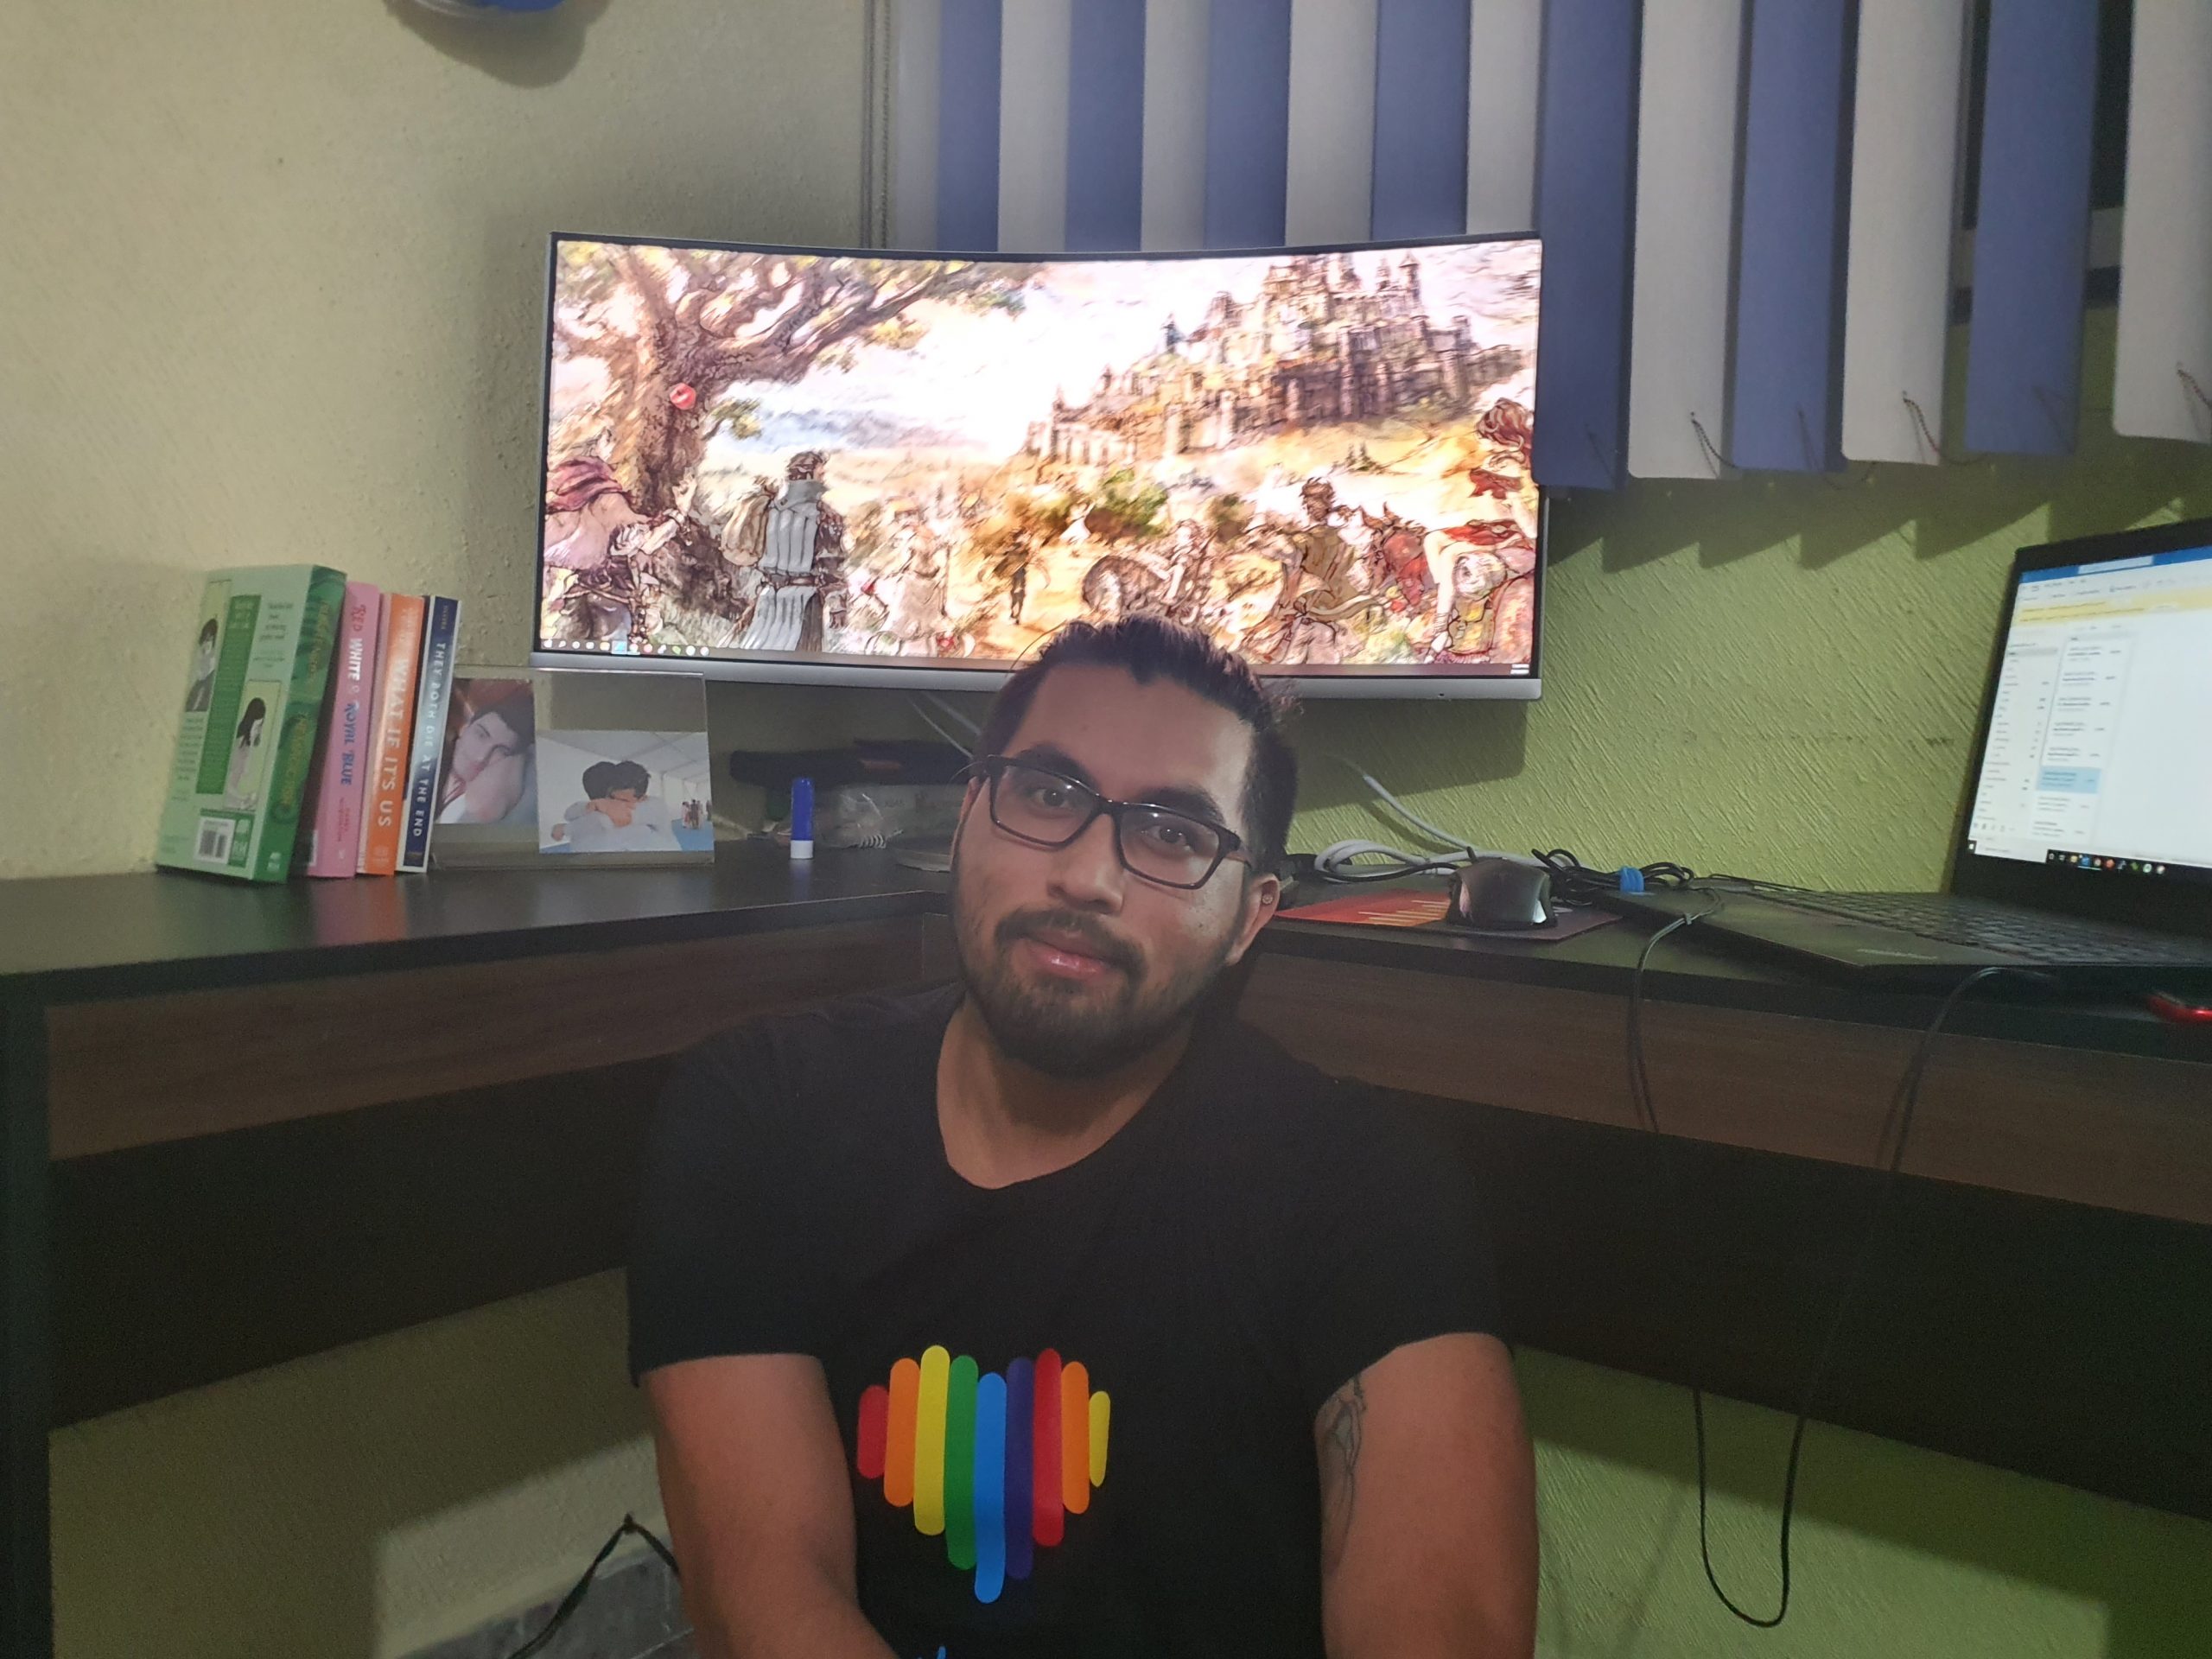 Jesus sitting in front of computer in pride shirt